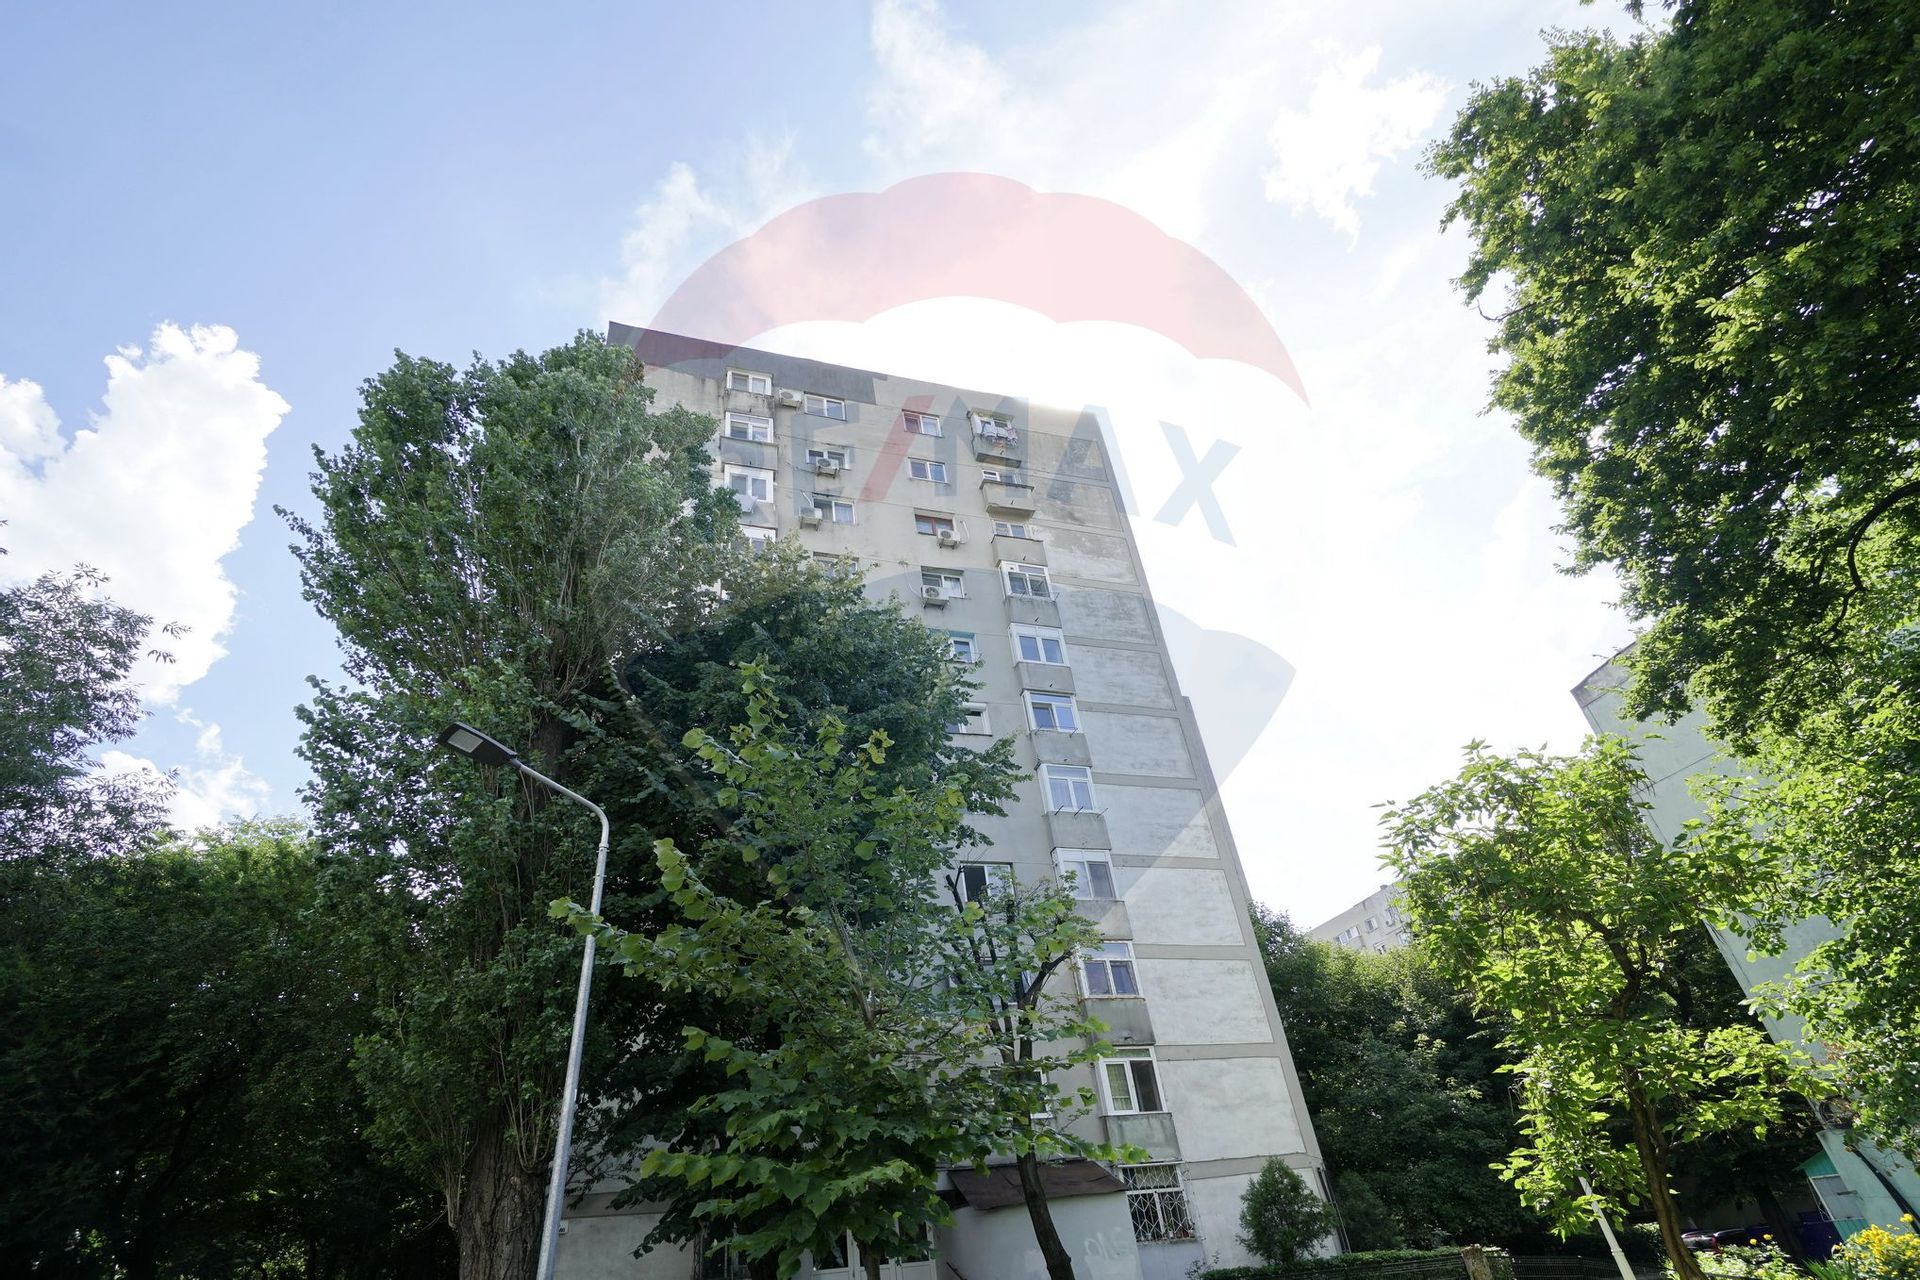 Apartament 2 camere vanzare in bloc de apartamente Bucuresti, Aparatorii Patriei